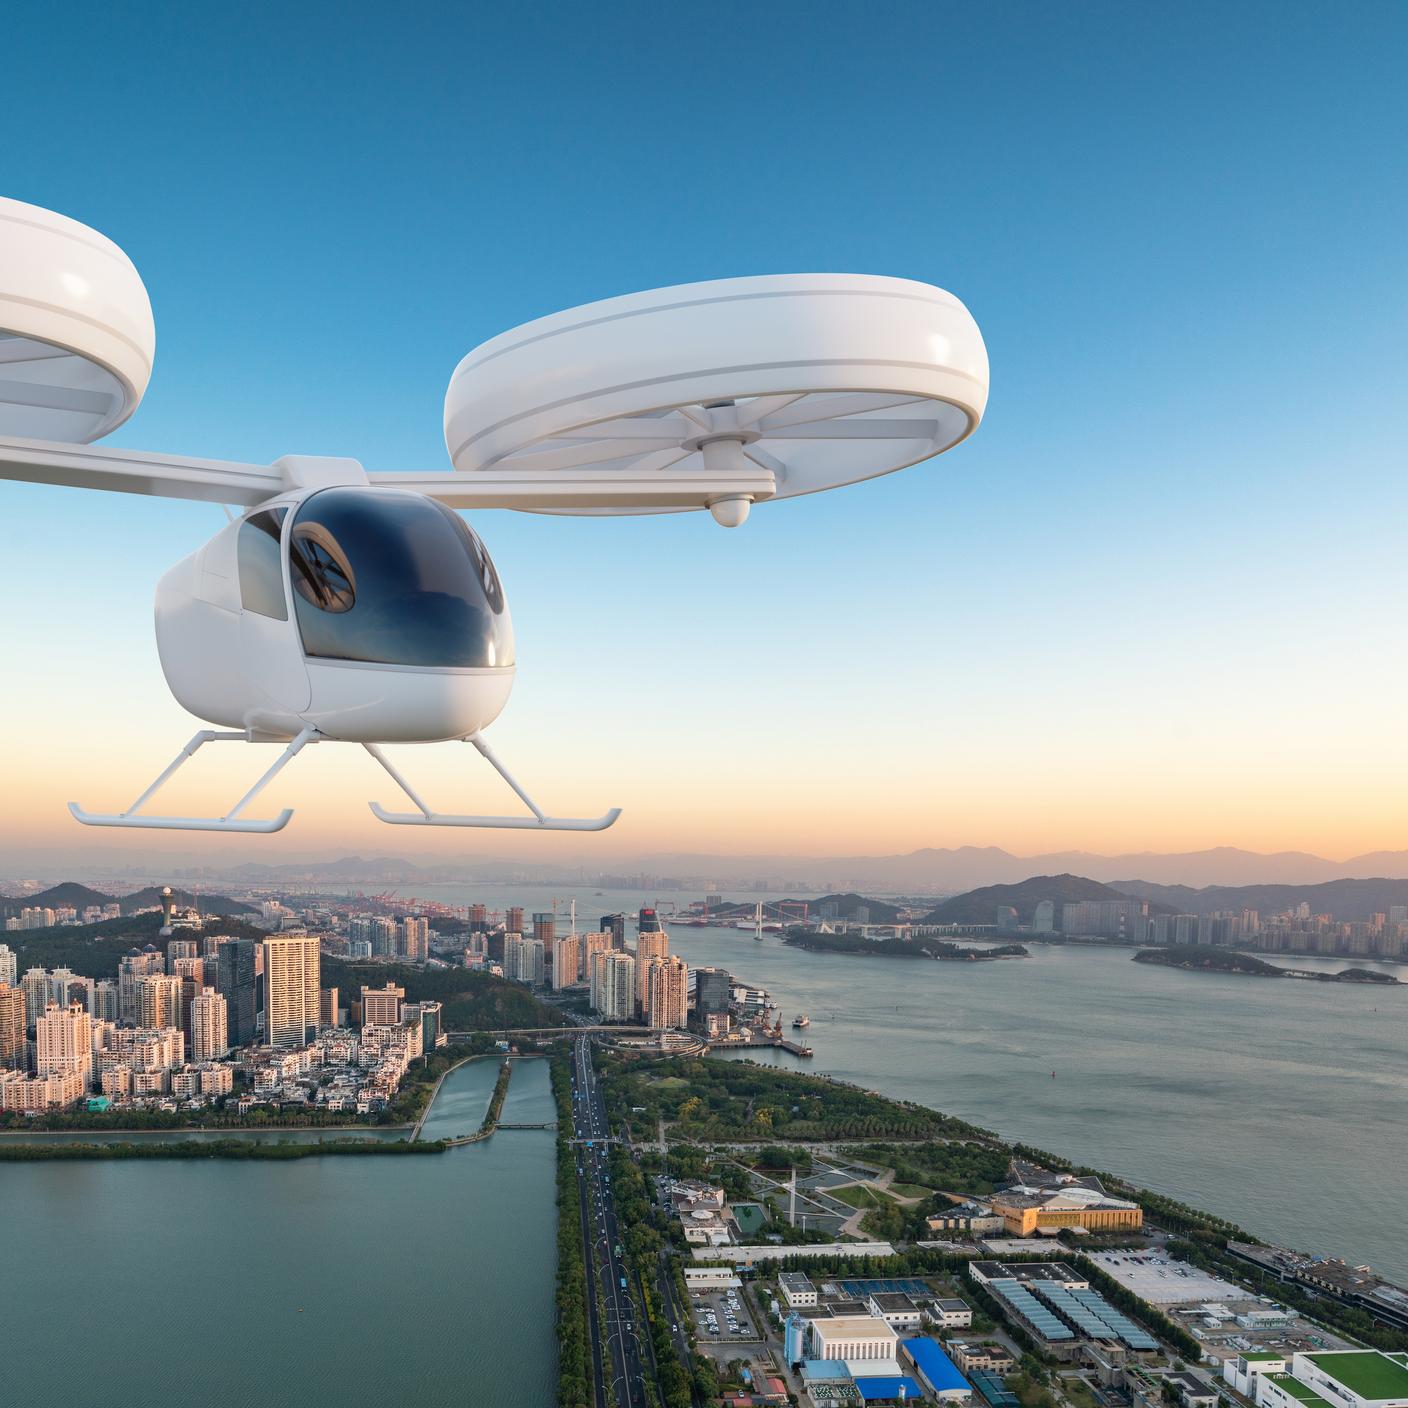 Making the future if flight - EVTOL traffic in the skies